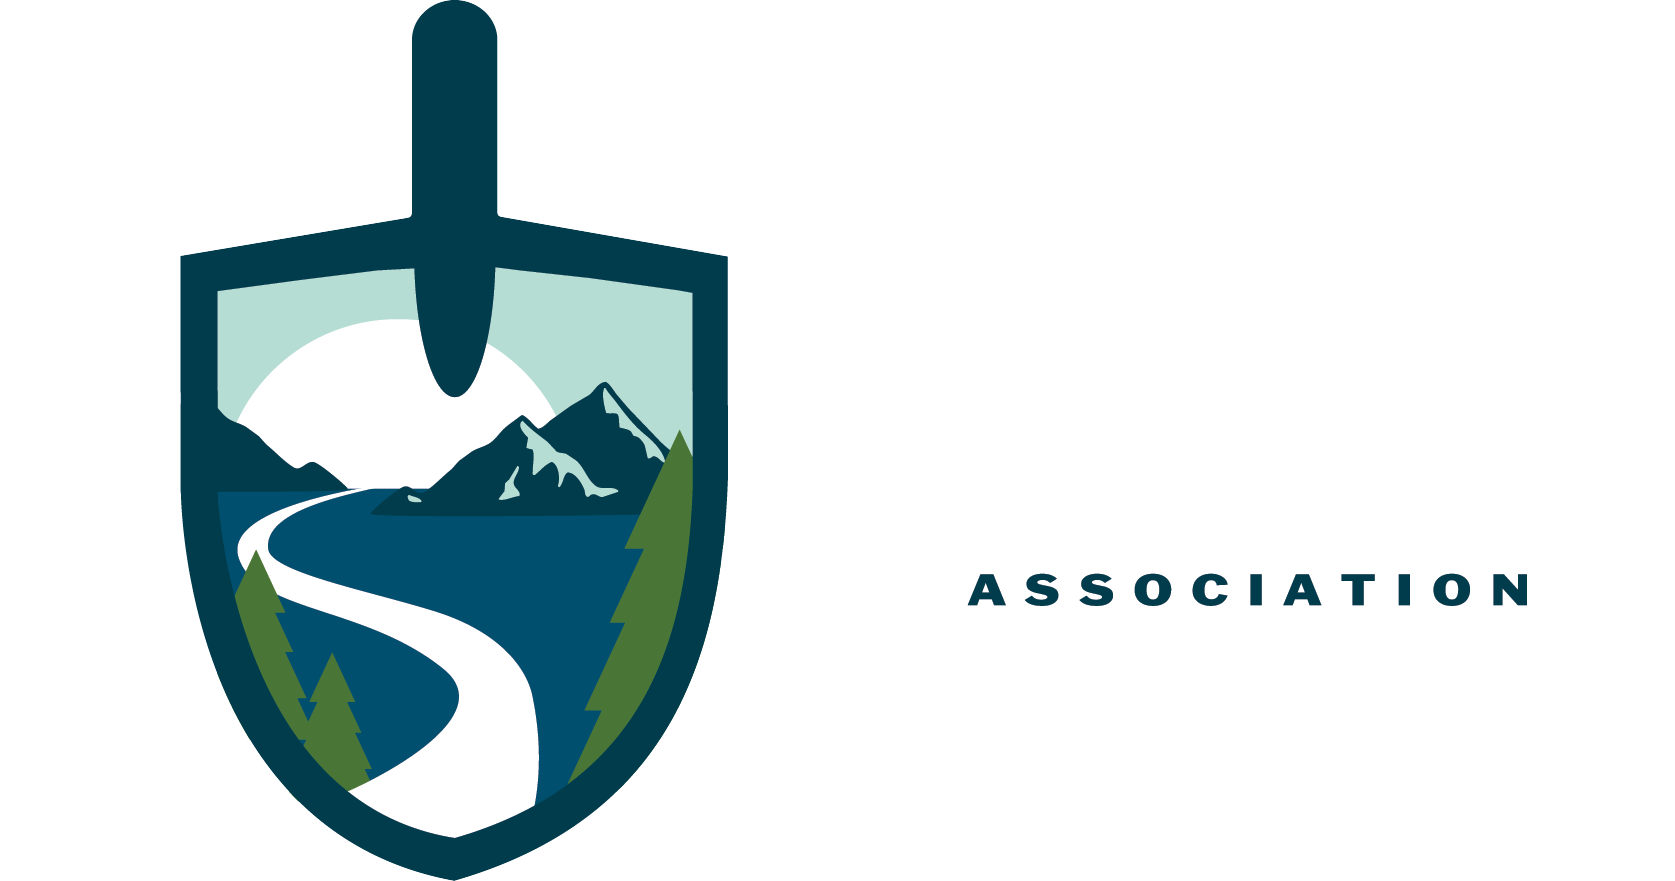 Professional TrailBuilders Association